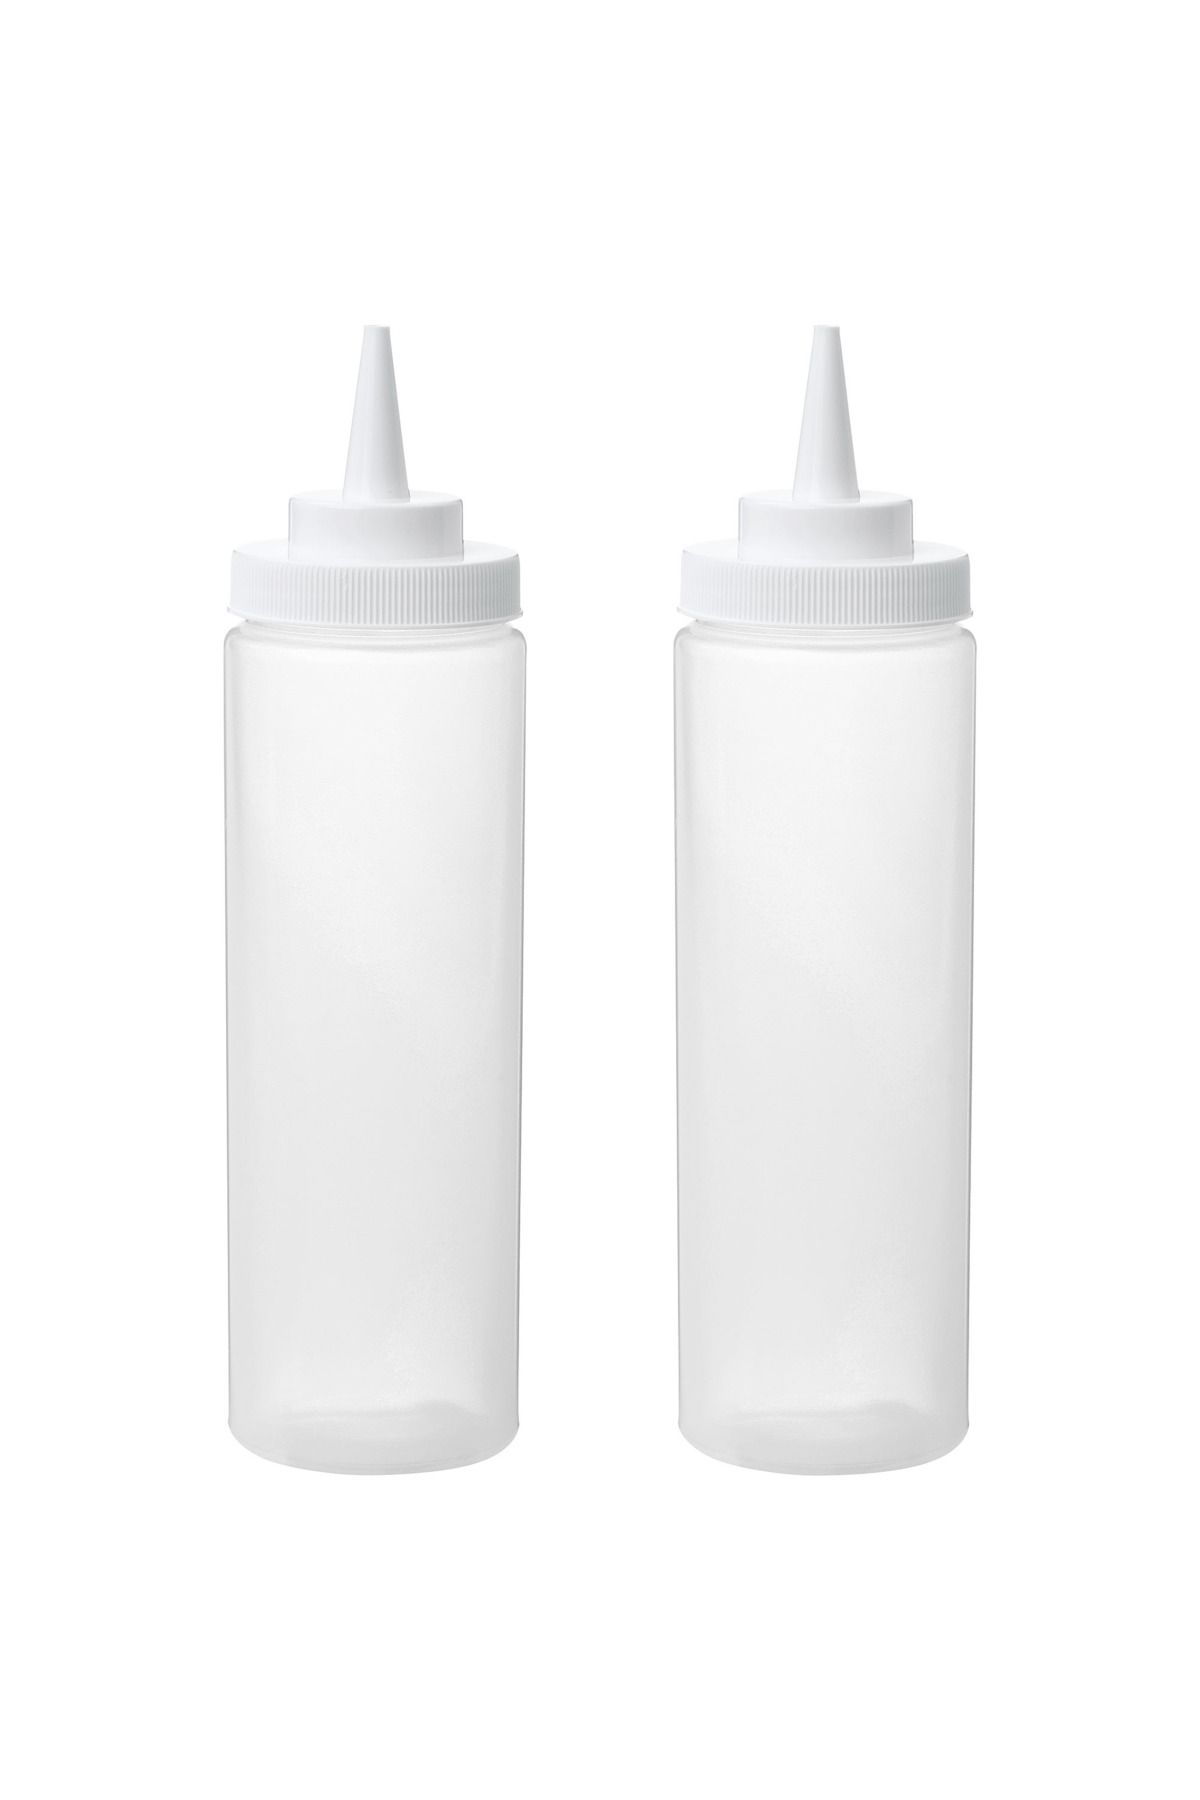 IKEA GRILLTIDER sos şişesi, şeffaf, 330 ml, 2 adet